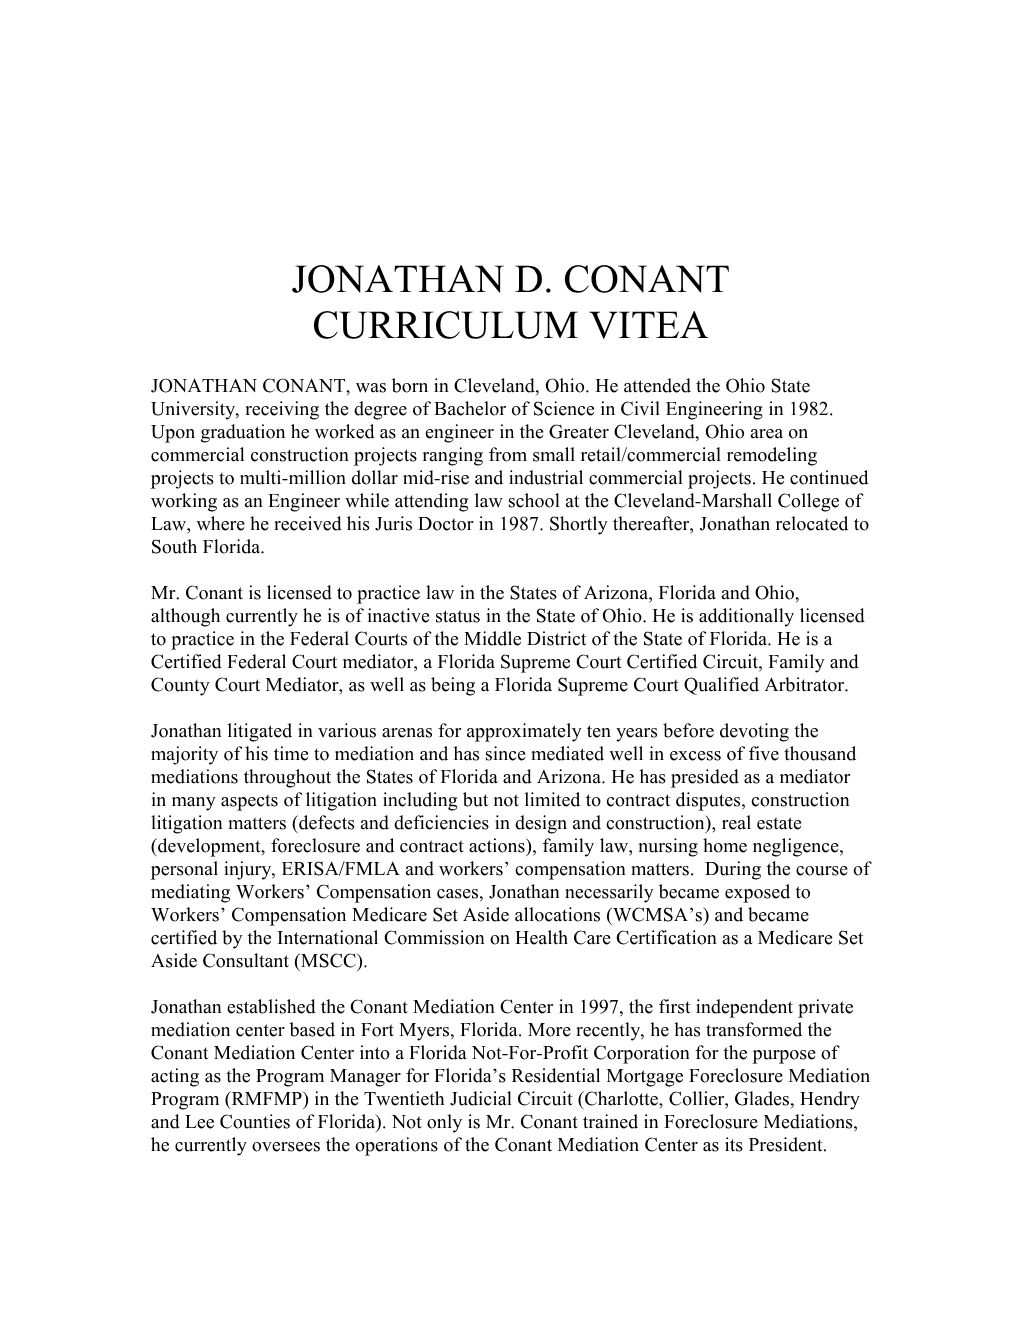 Jonathan D. Conant